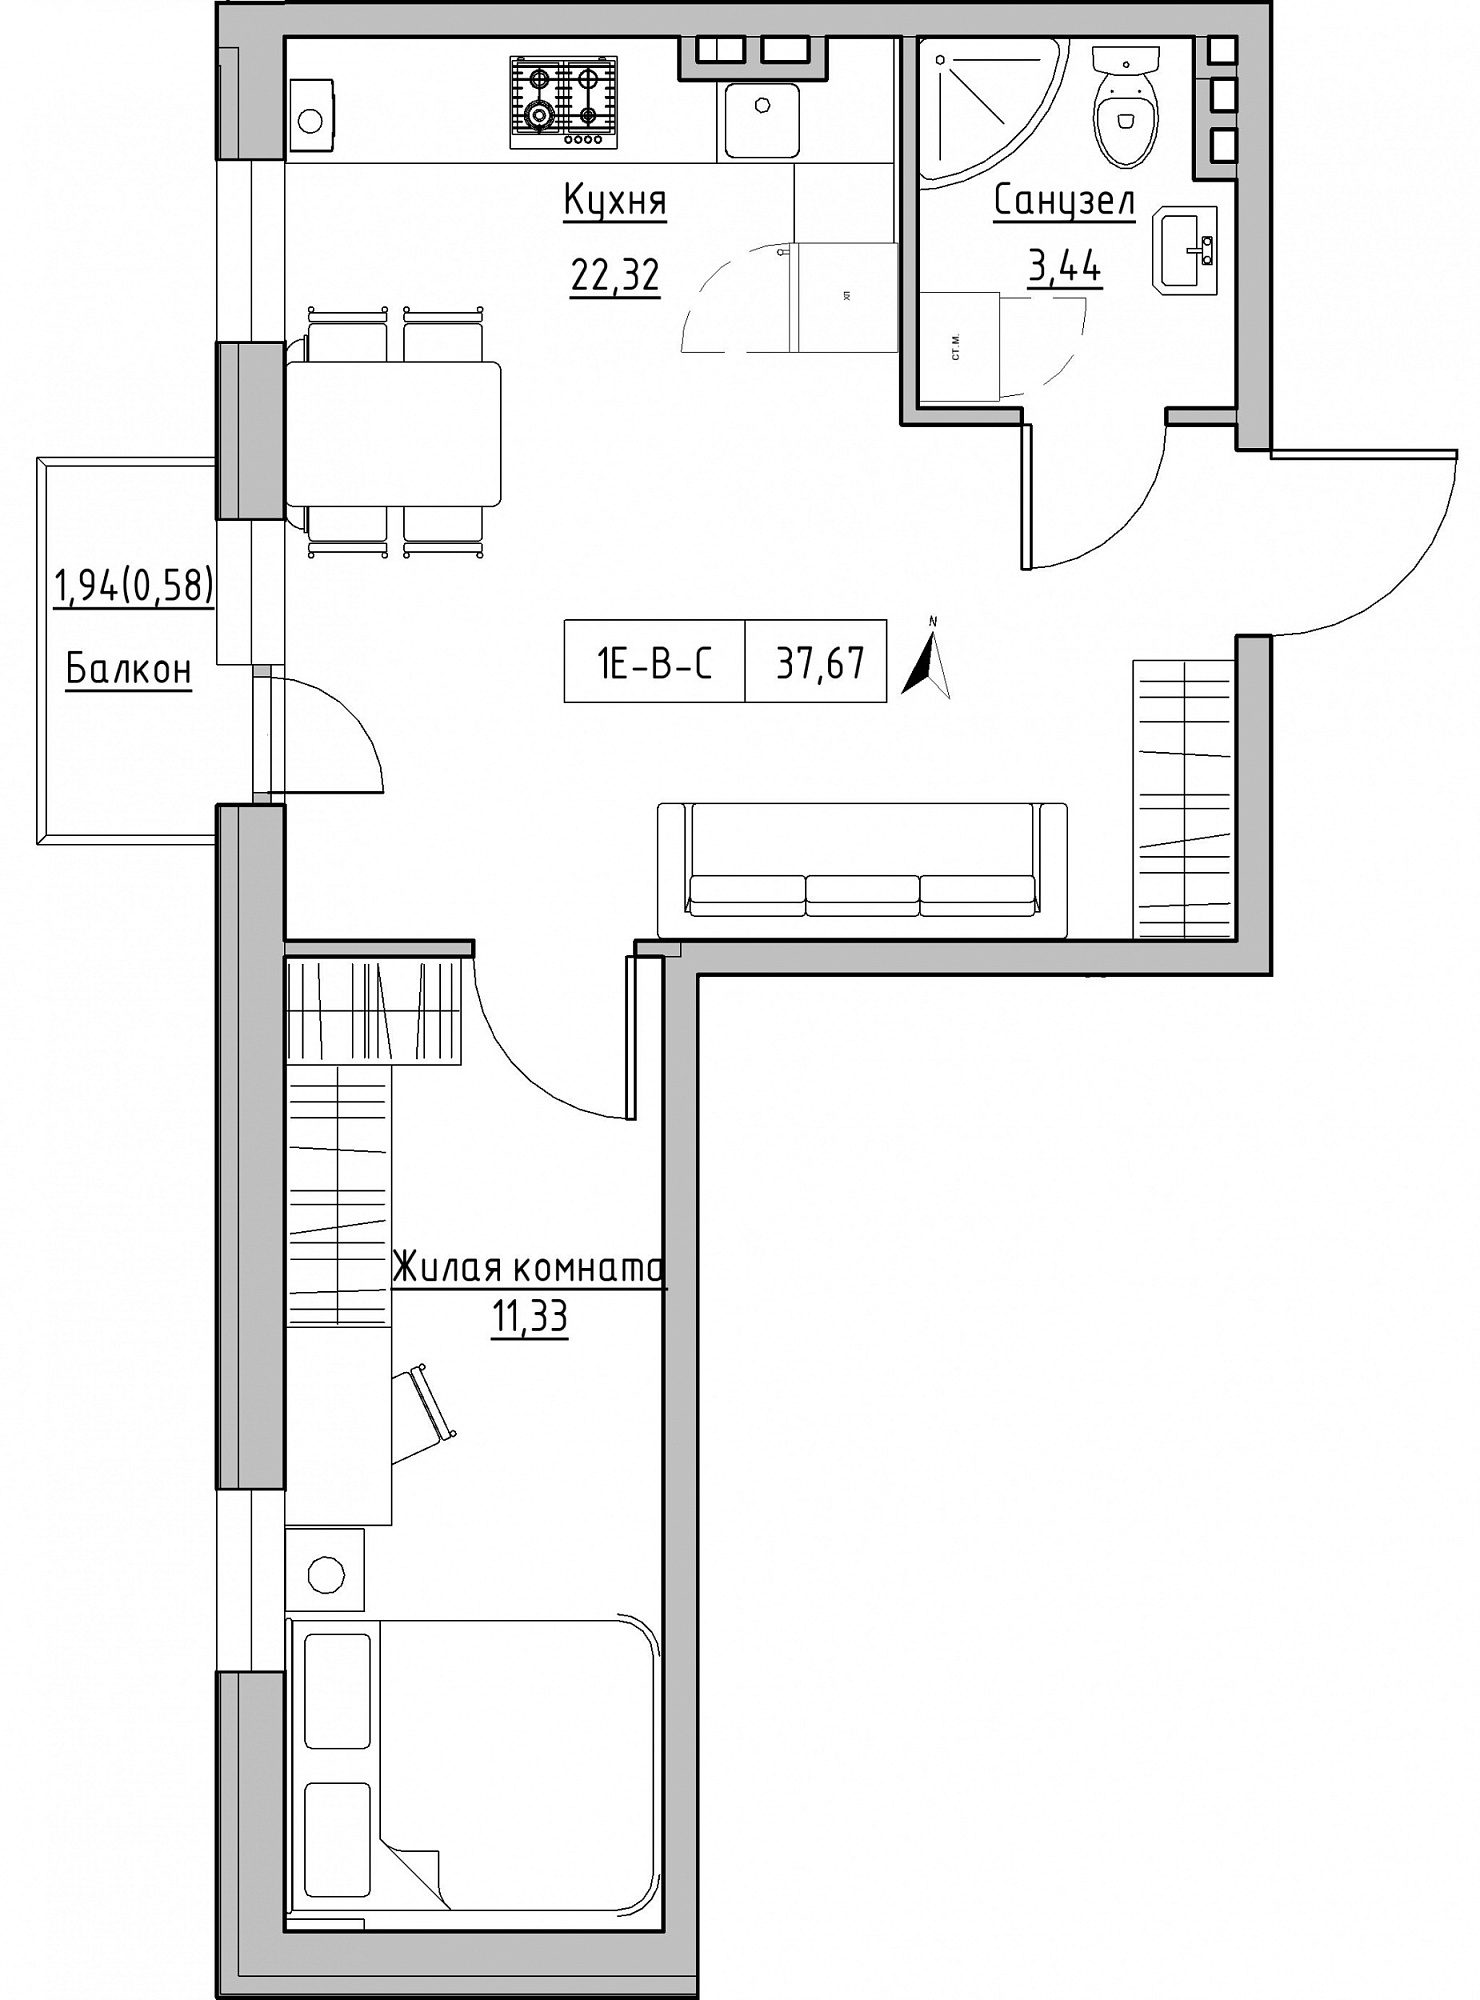 Planning 1-rm flats area 37.67m2, KS-024-02/0009.